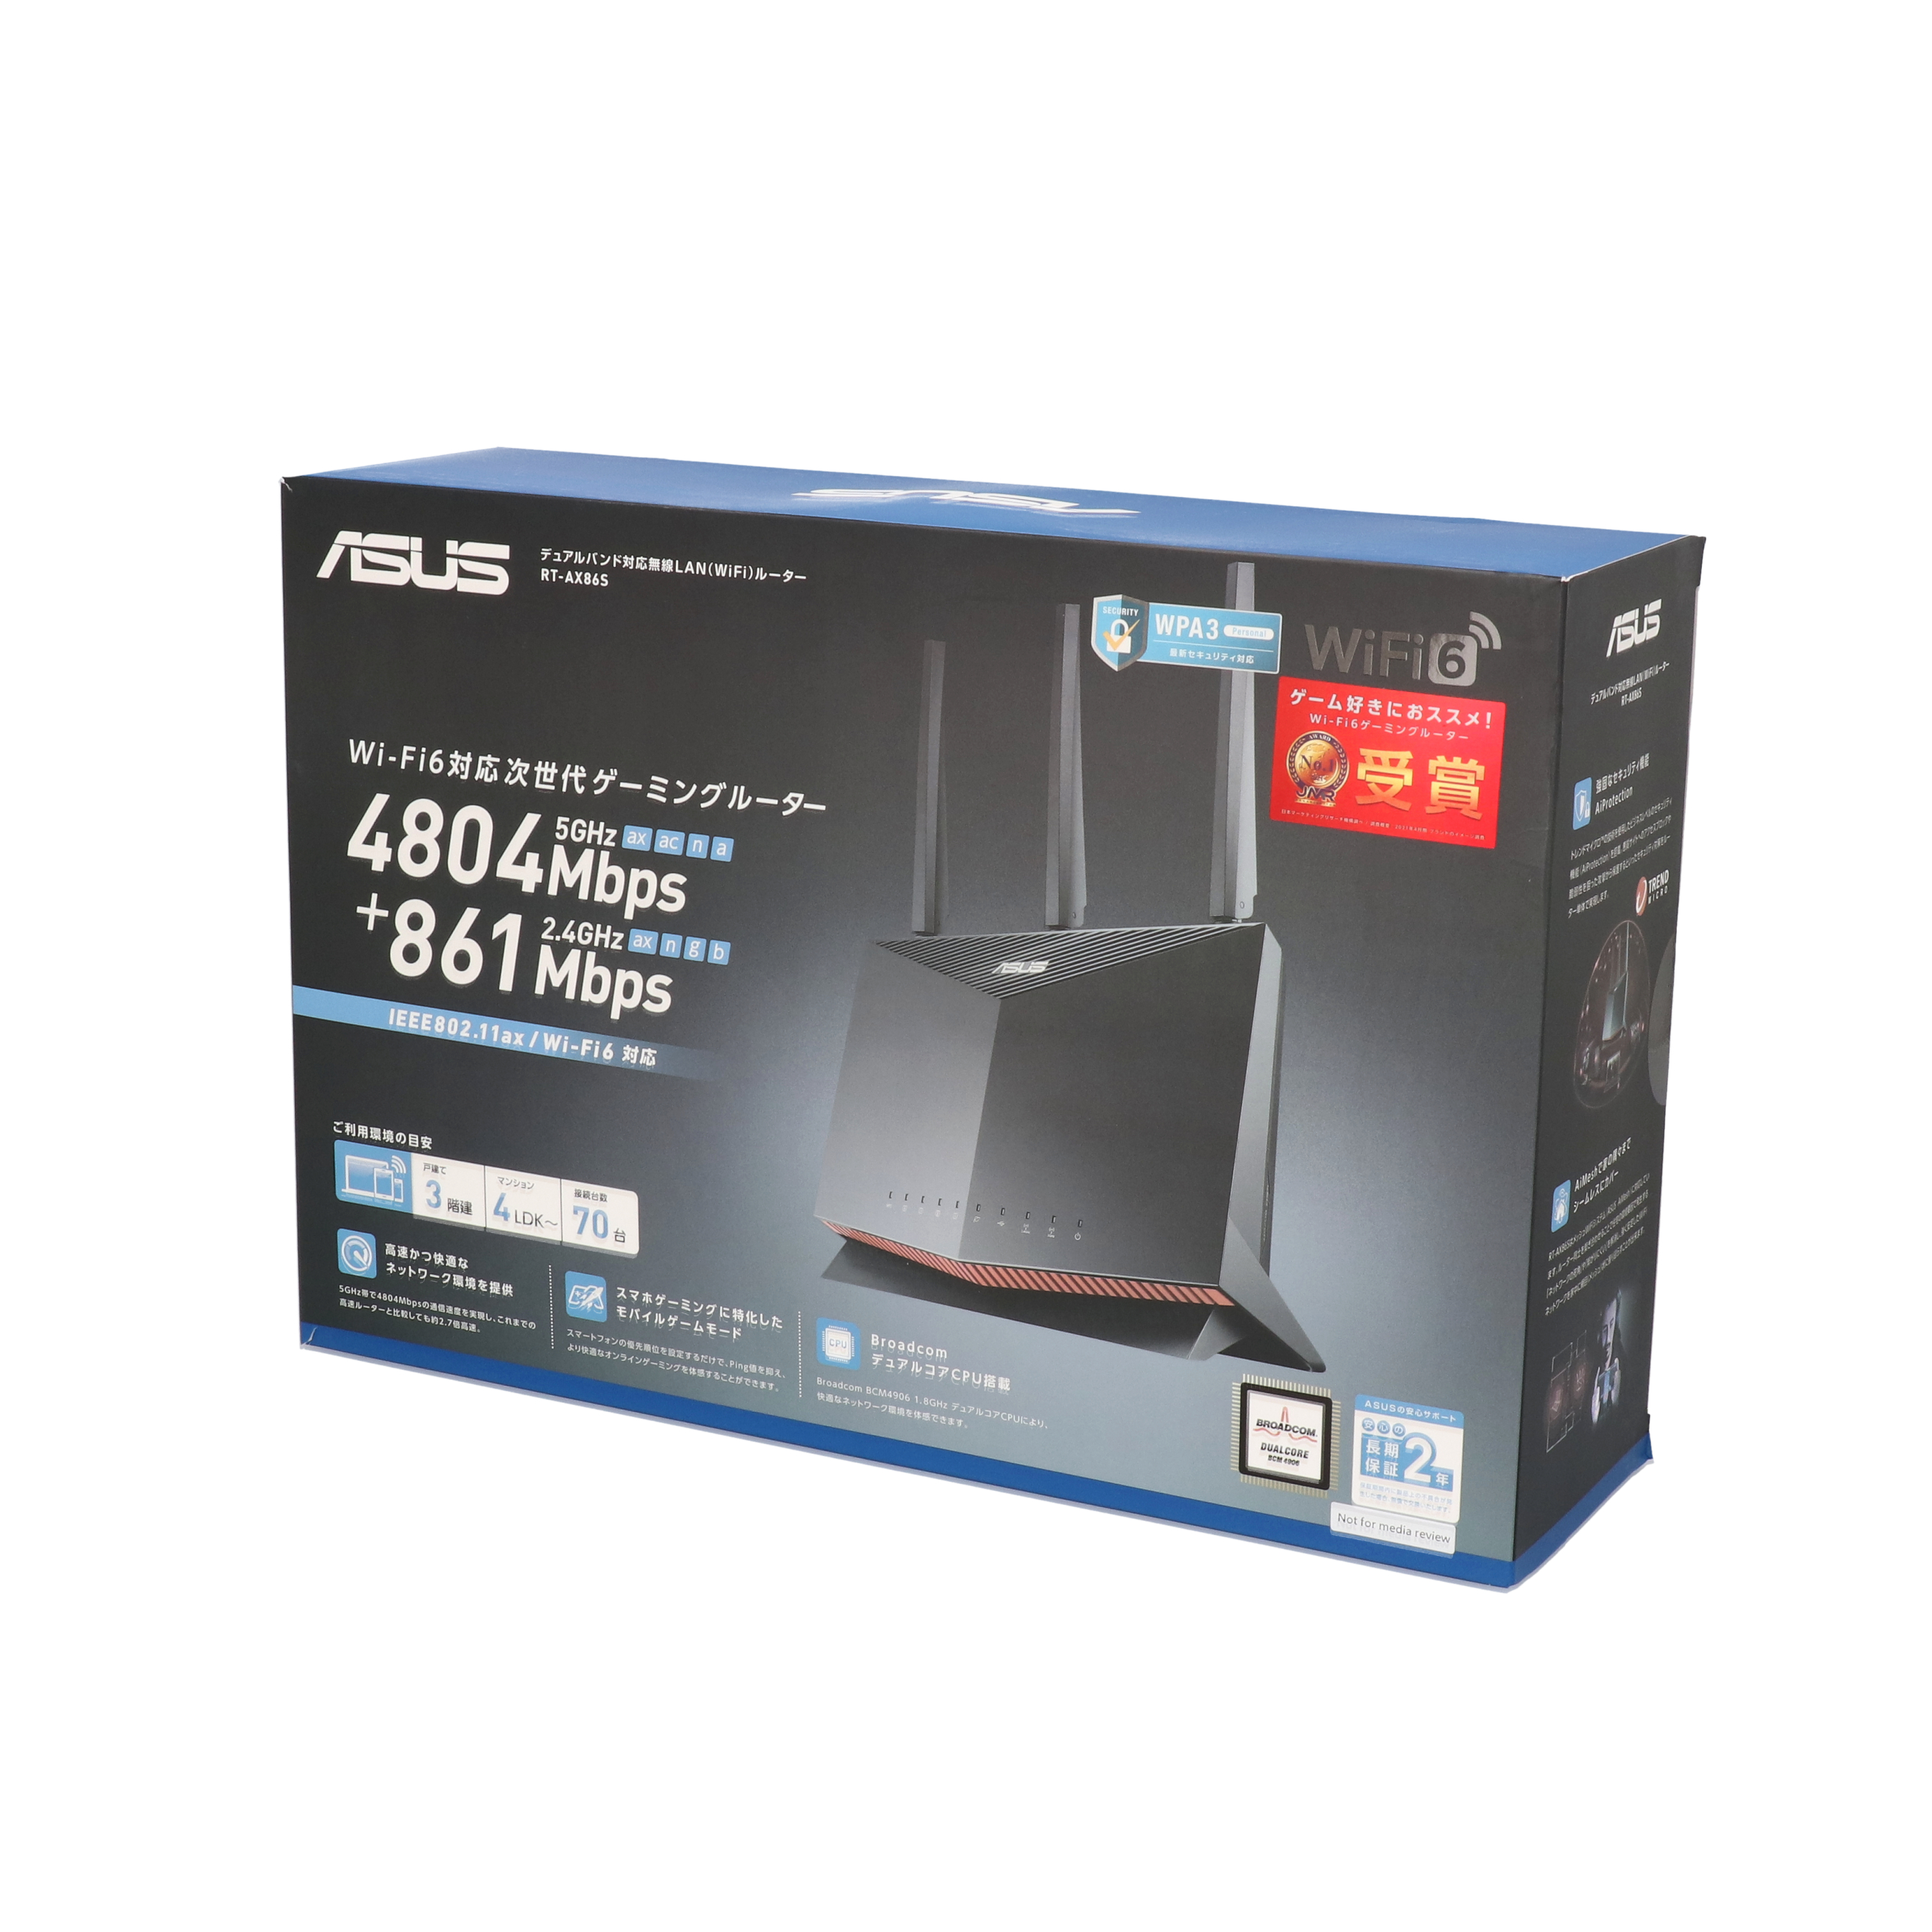 ASUS RT-AX86S WiFi6 4804Mbps ゲーミングルーター-